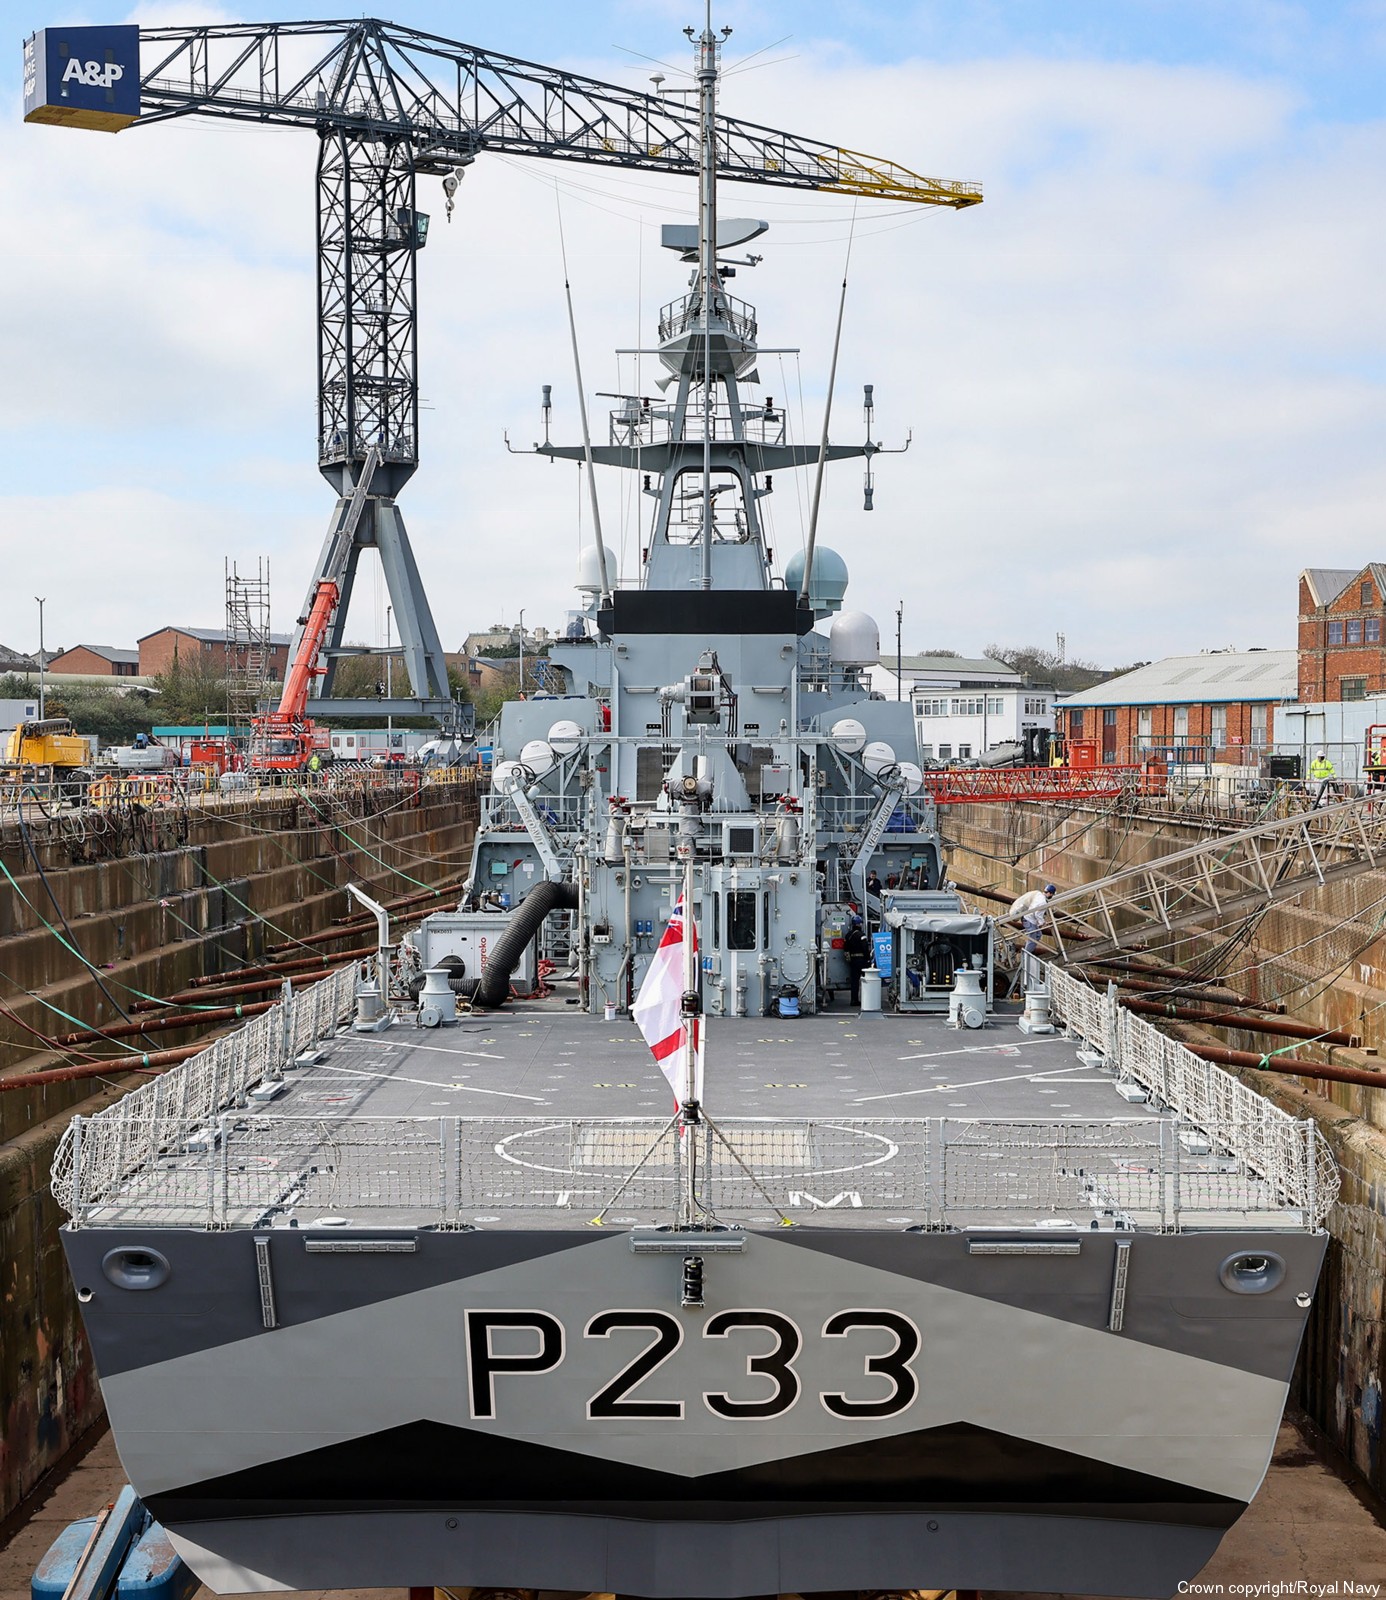 p-233 hms tamar river class offshore patrol vessel opv royal navy 23